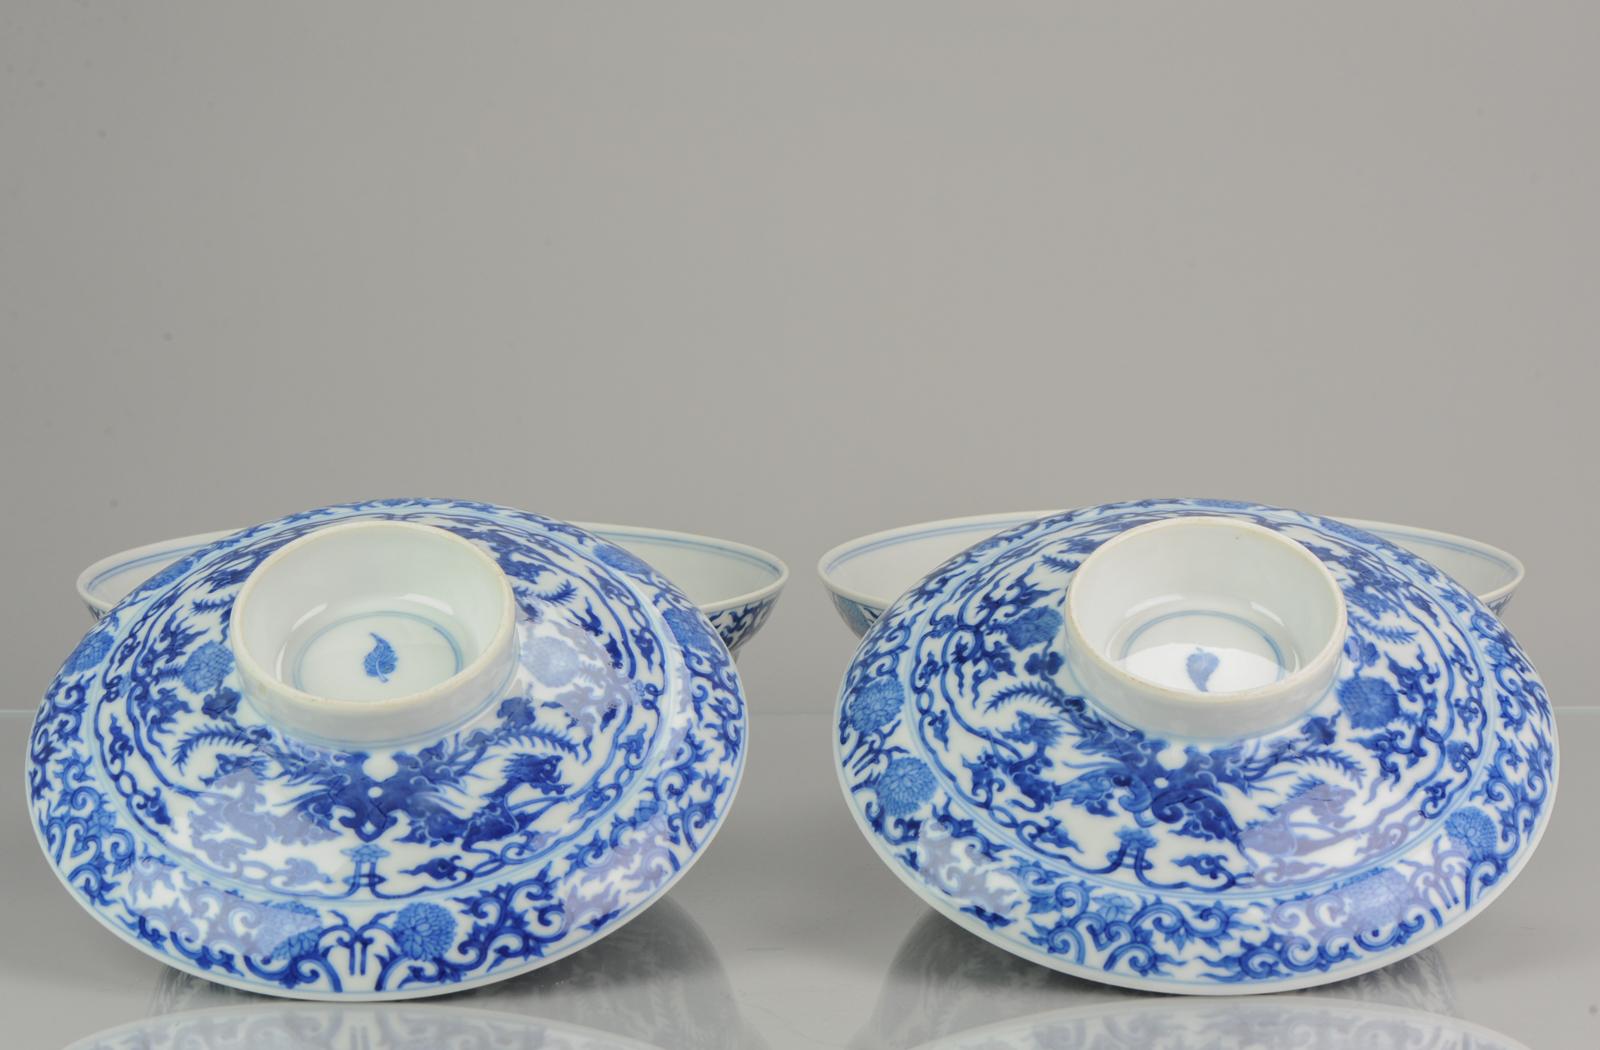 Antique 19th Century Guangxu Period Chinese Porcelain Bowls SE Asian Market For Sale 13